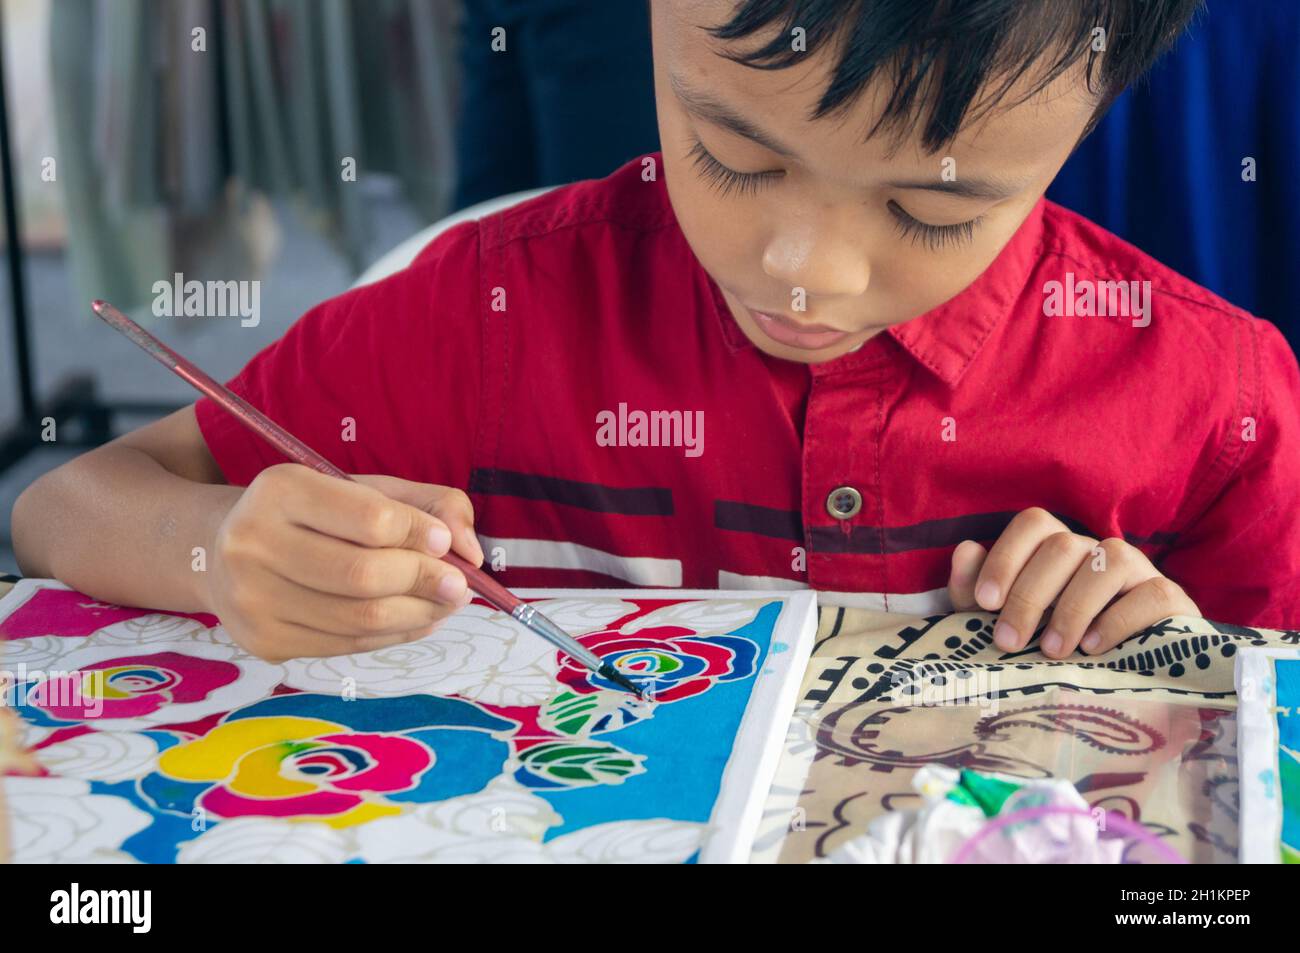 Georgetown, Penang/Malaysia - Feb 15 2020: A kid color the batik drawing. Stock Photo